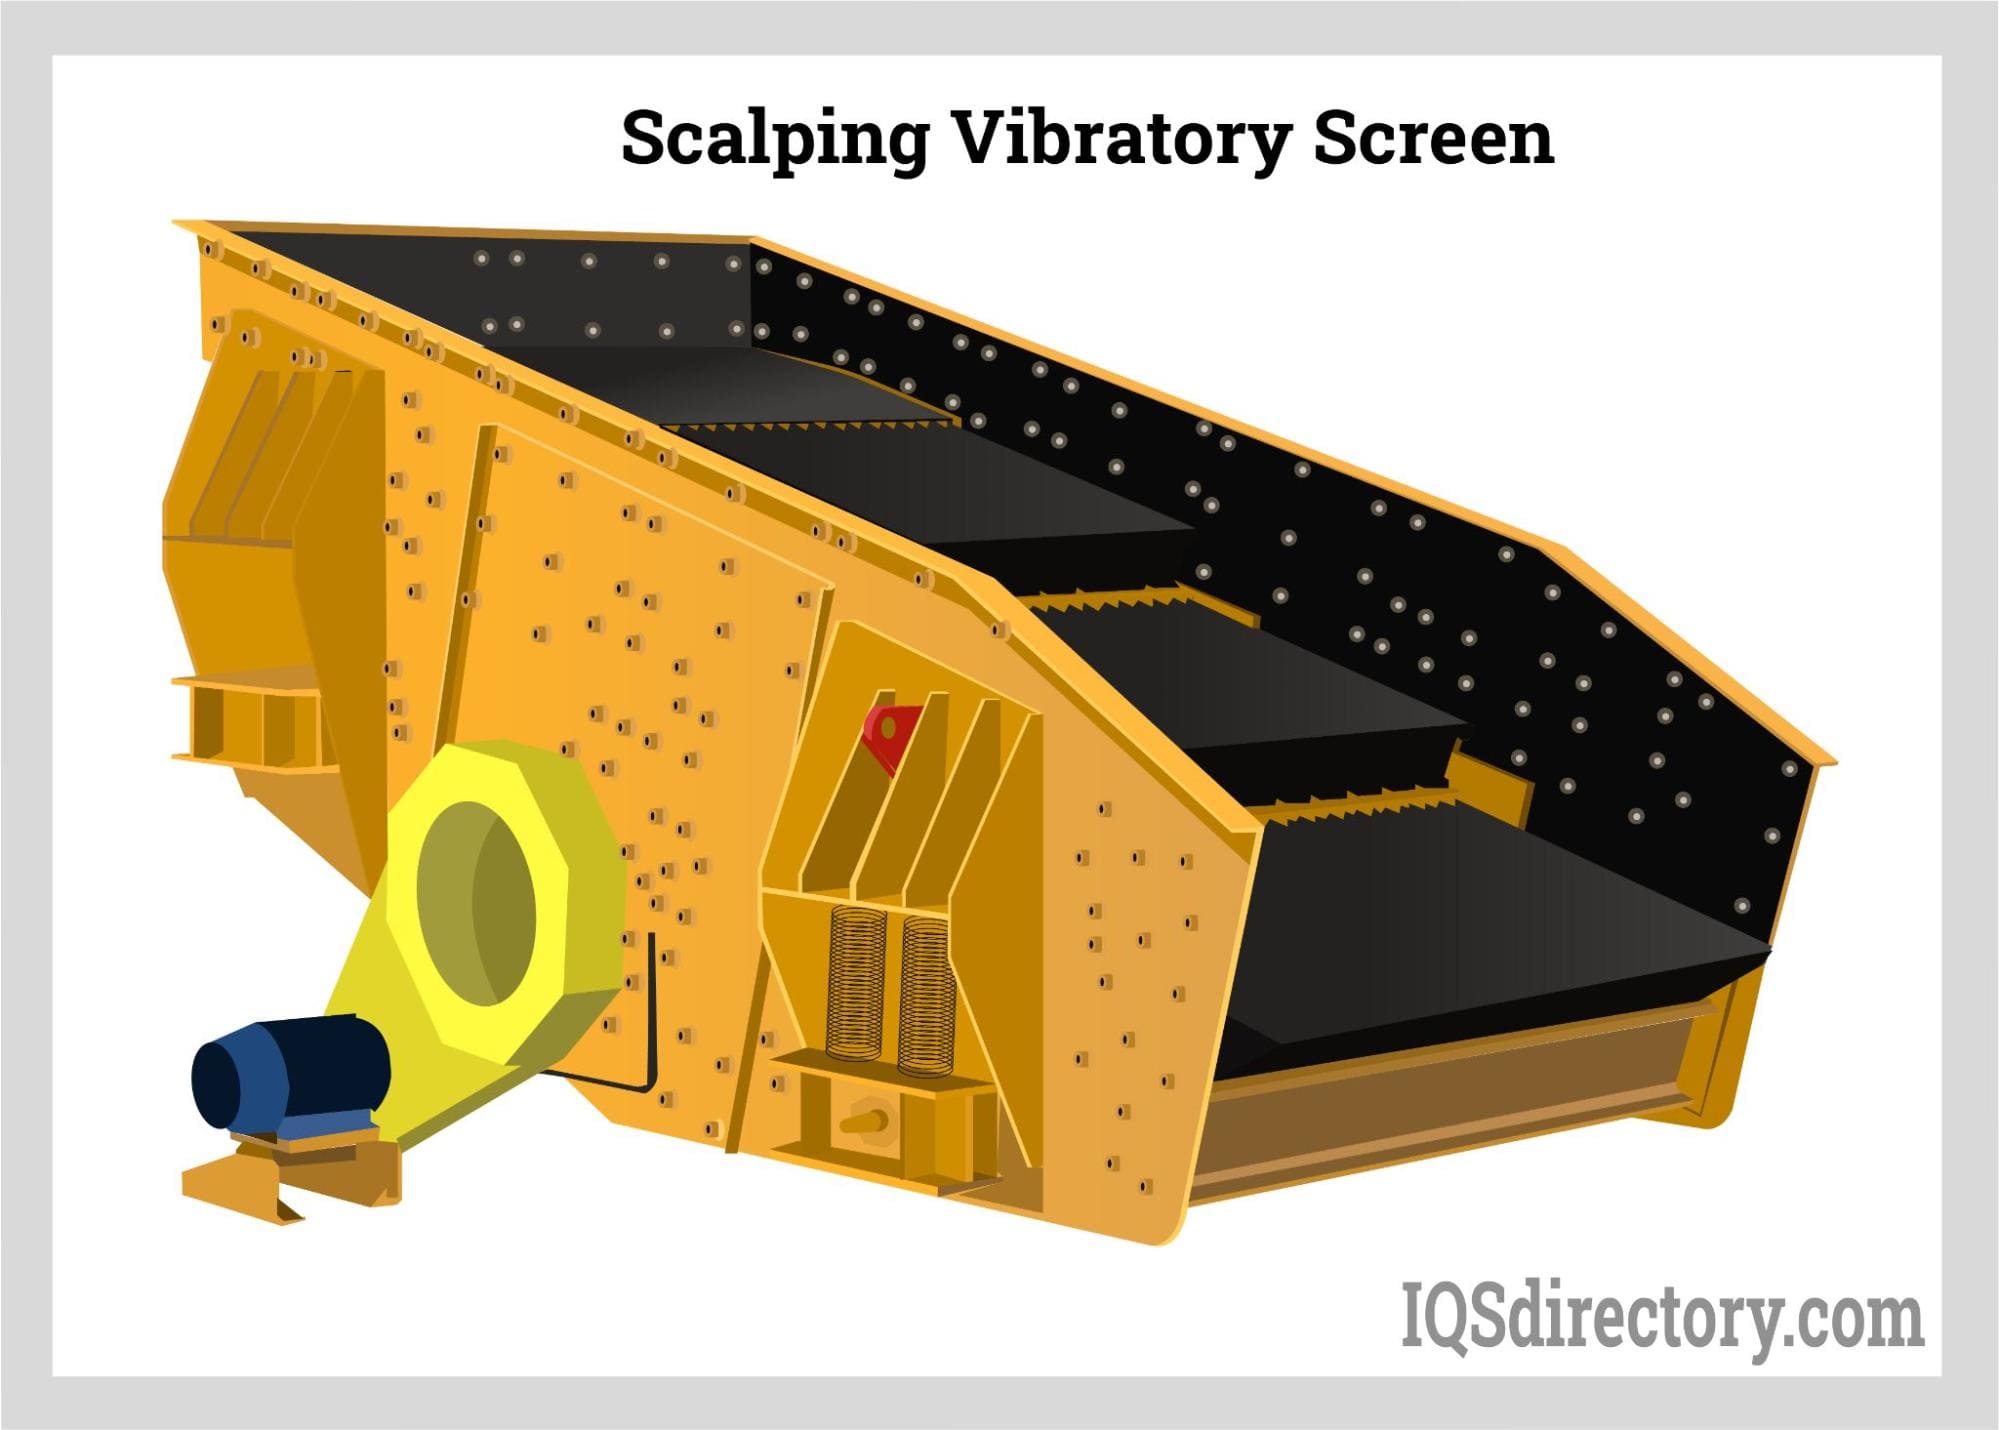 Scalping Vibratory Screen